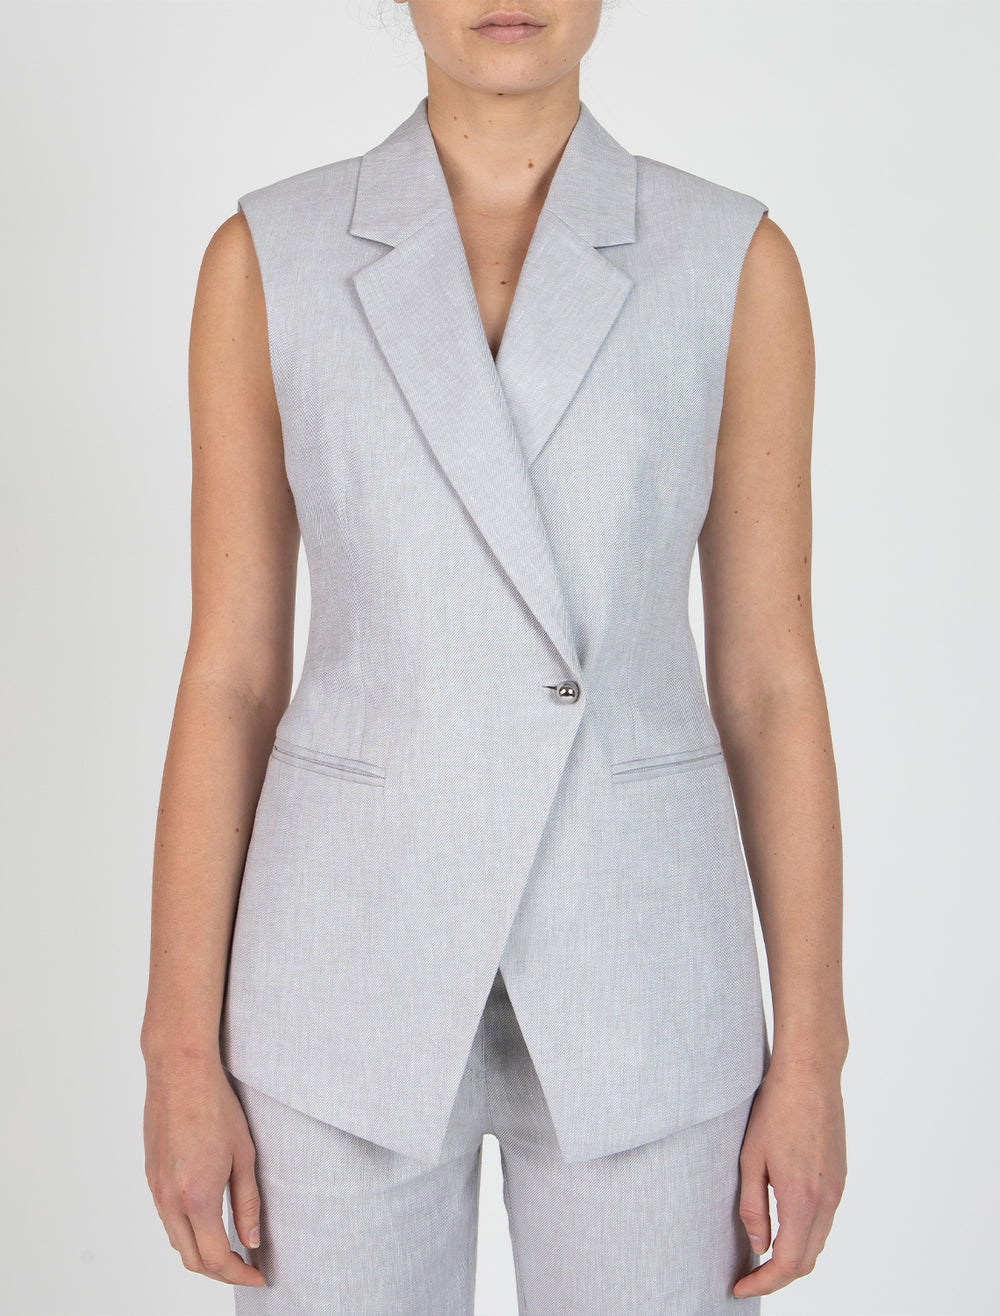 Model wearing Derek Lam 10 Crosby's taylor vest in pale grey.